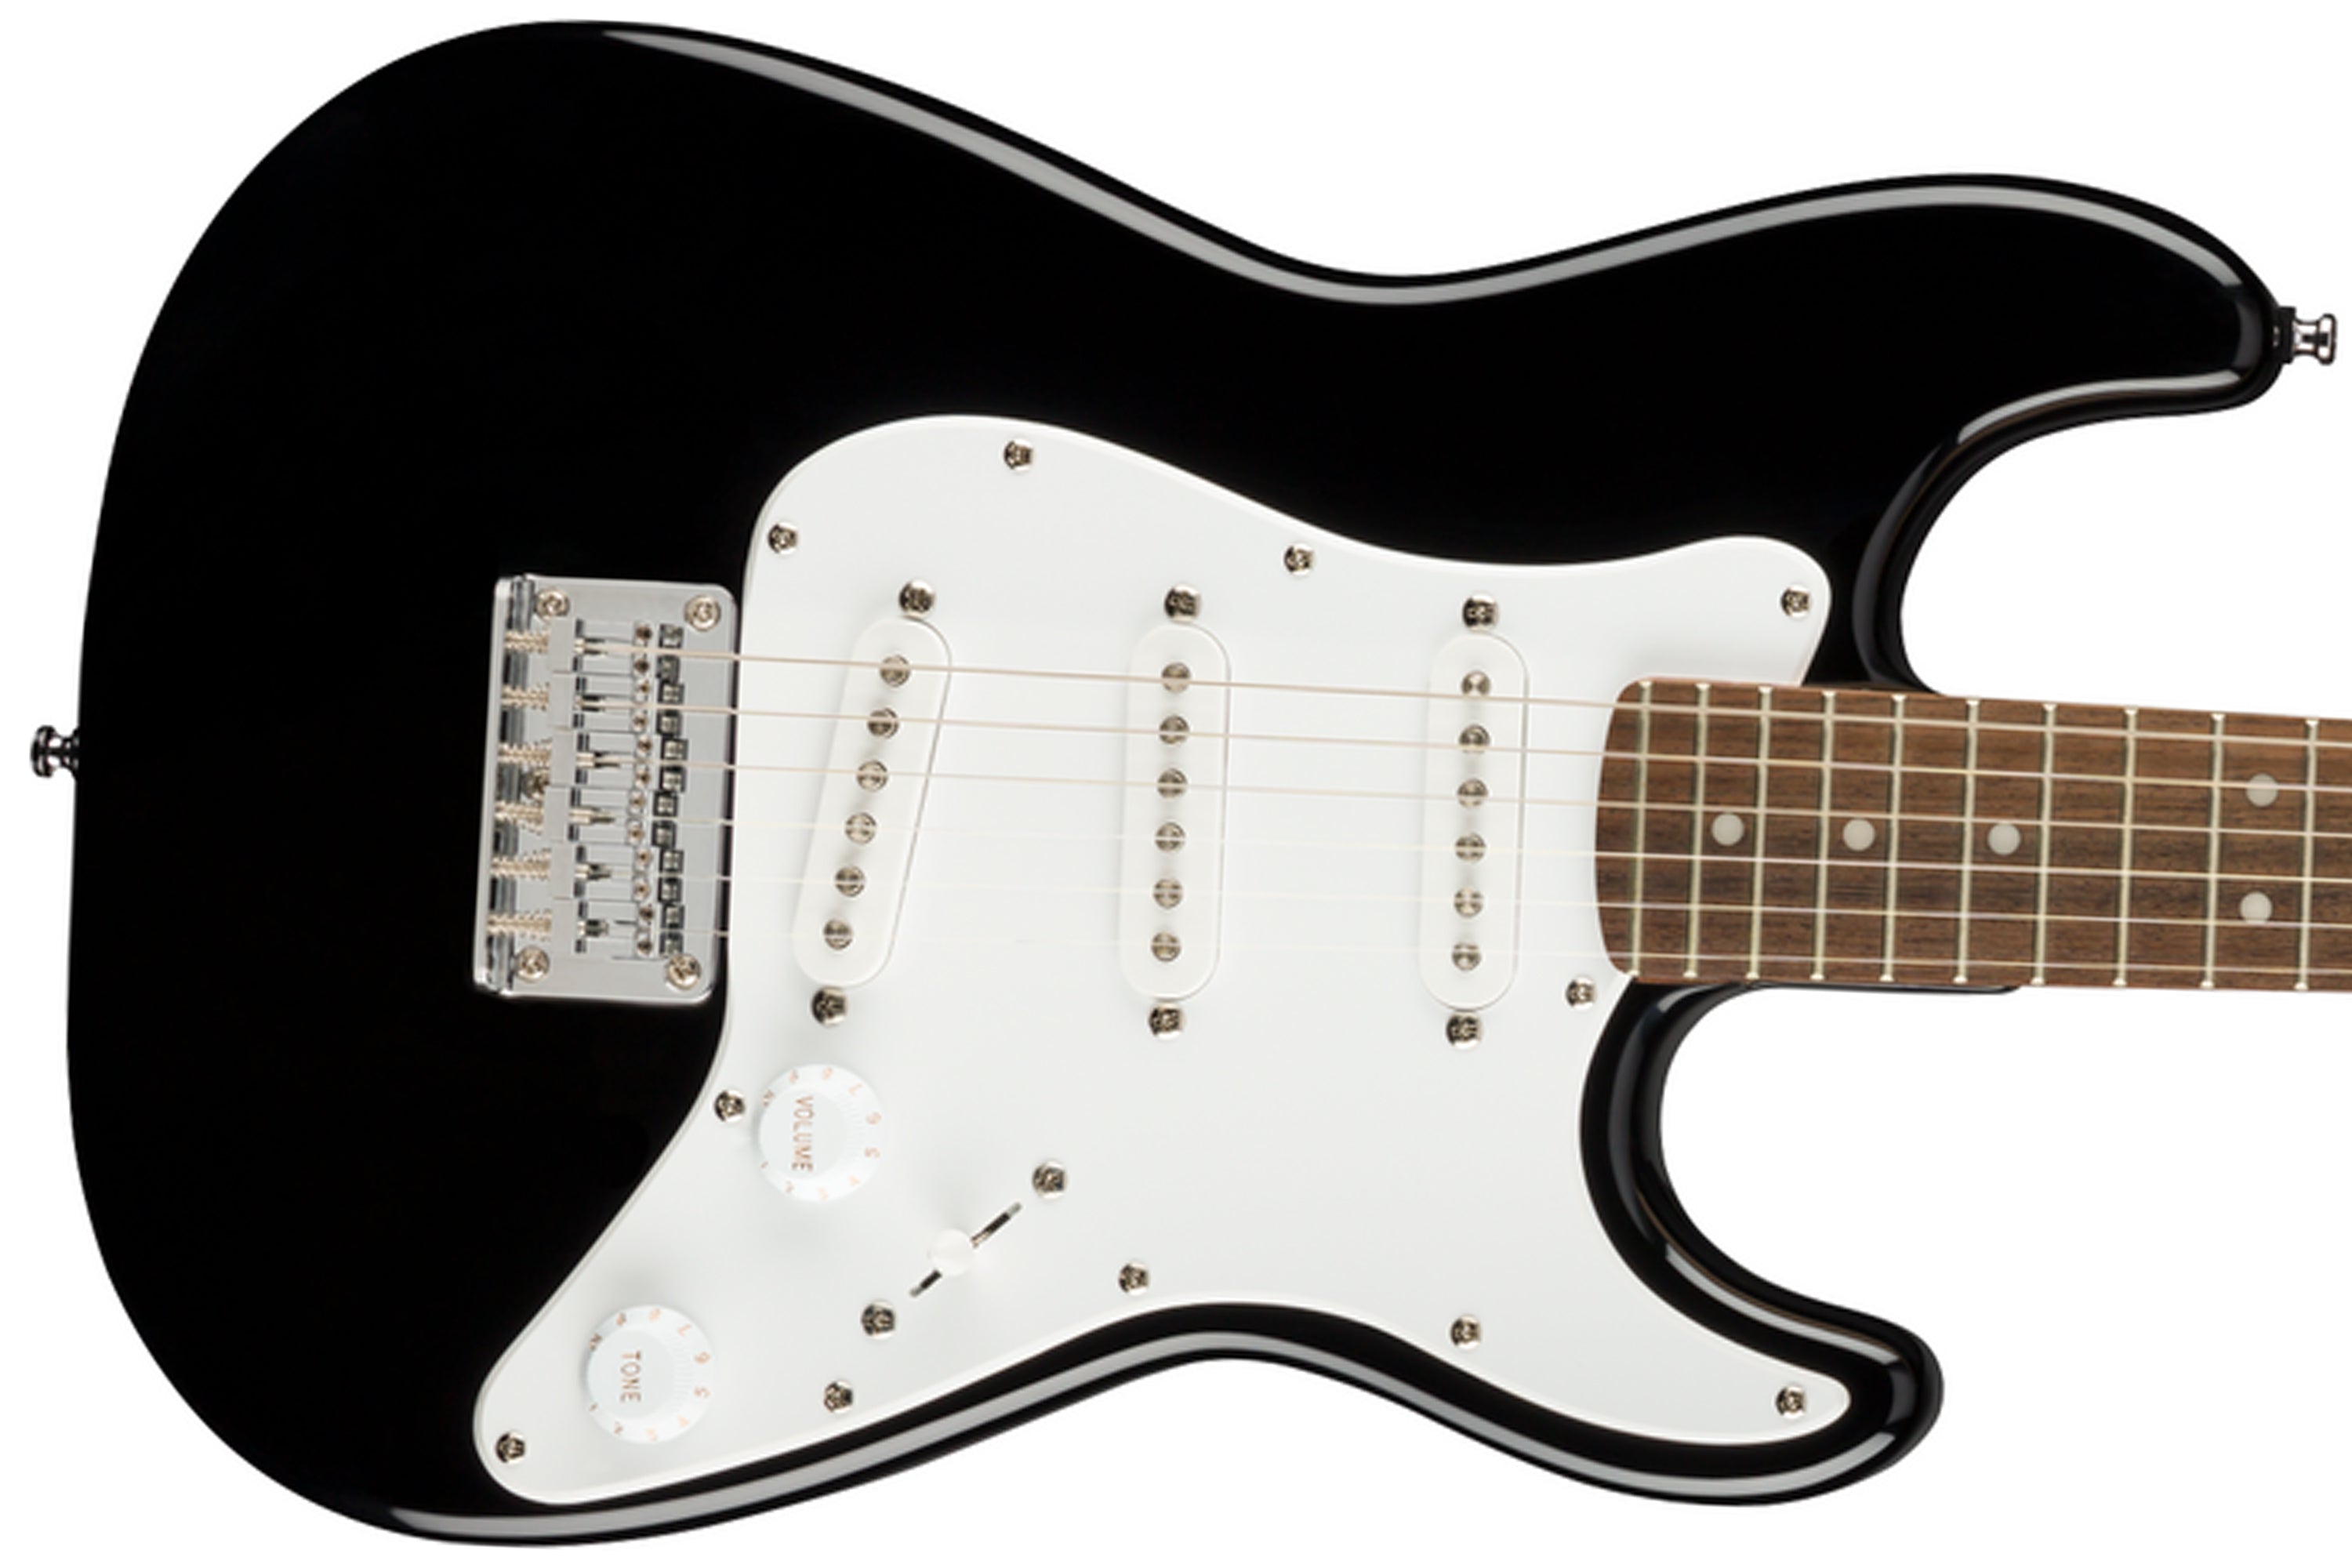 Squire By Fender Mini Stratocaster Guitar - Black